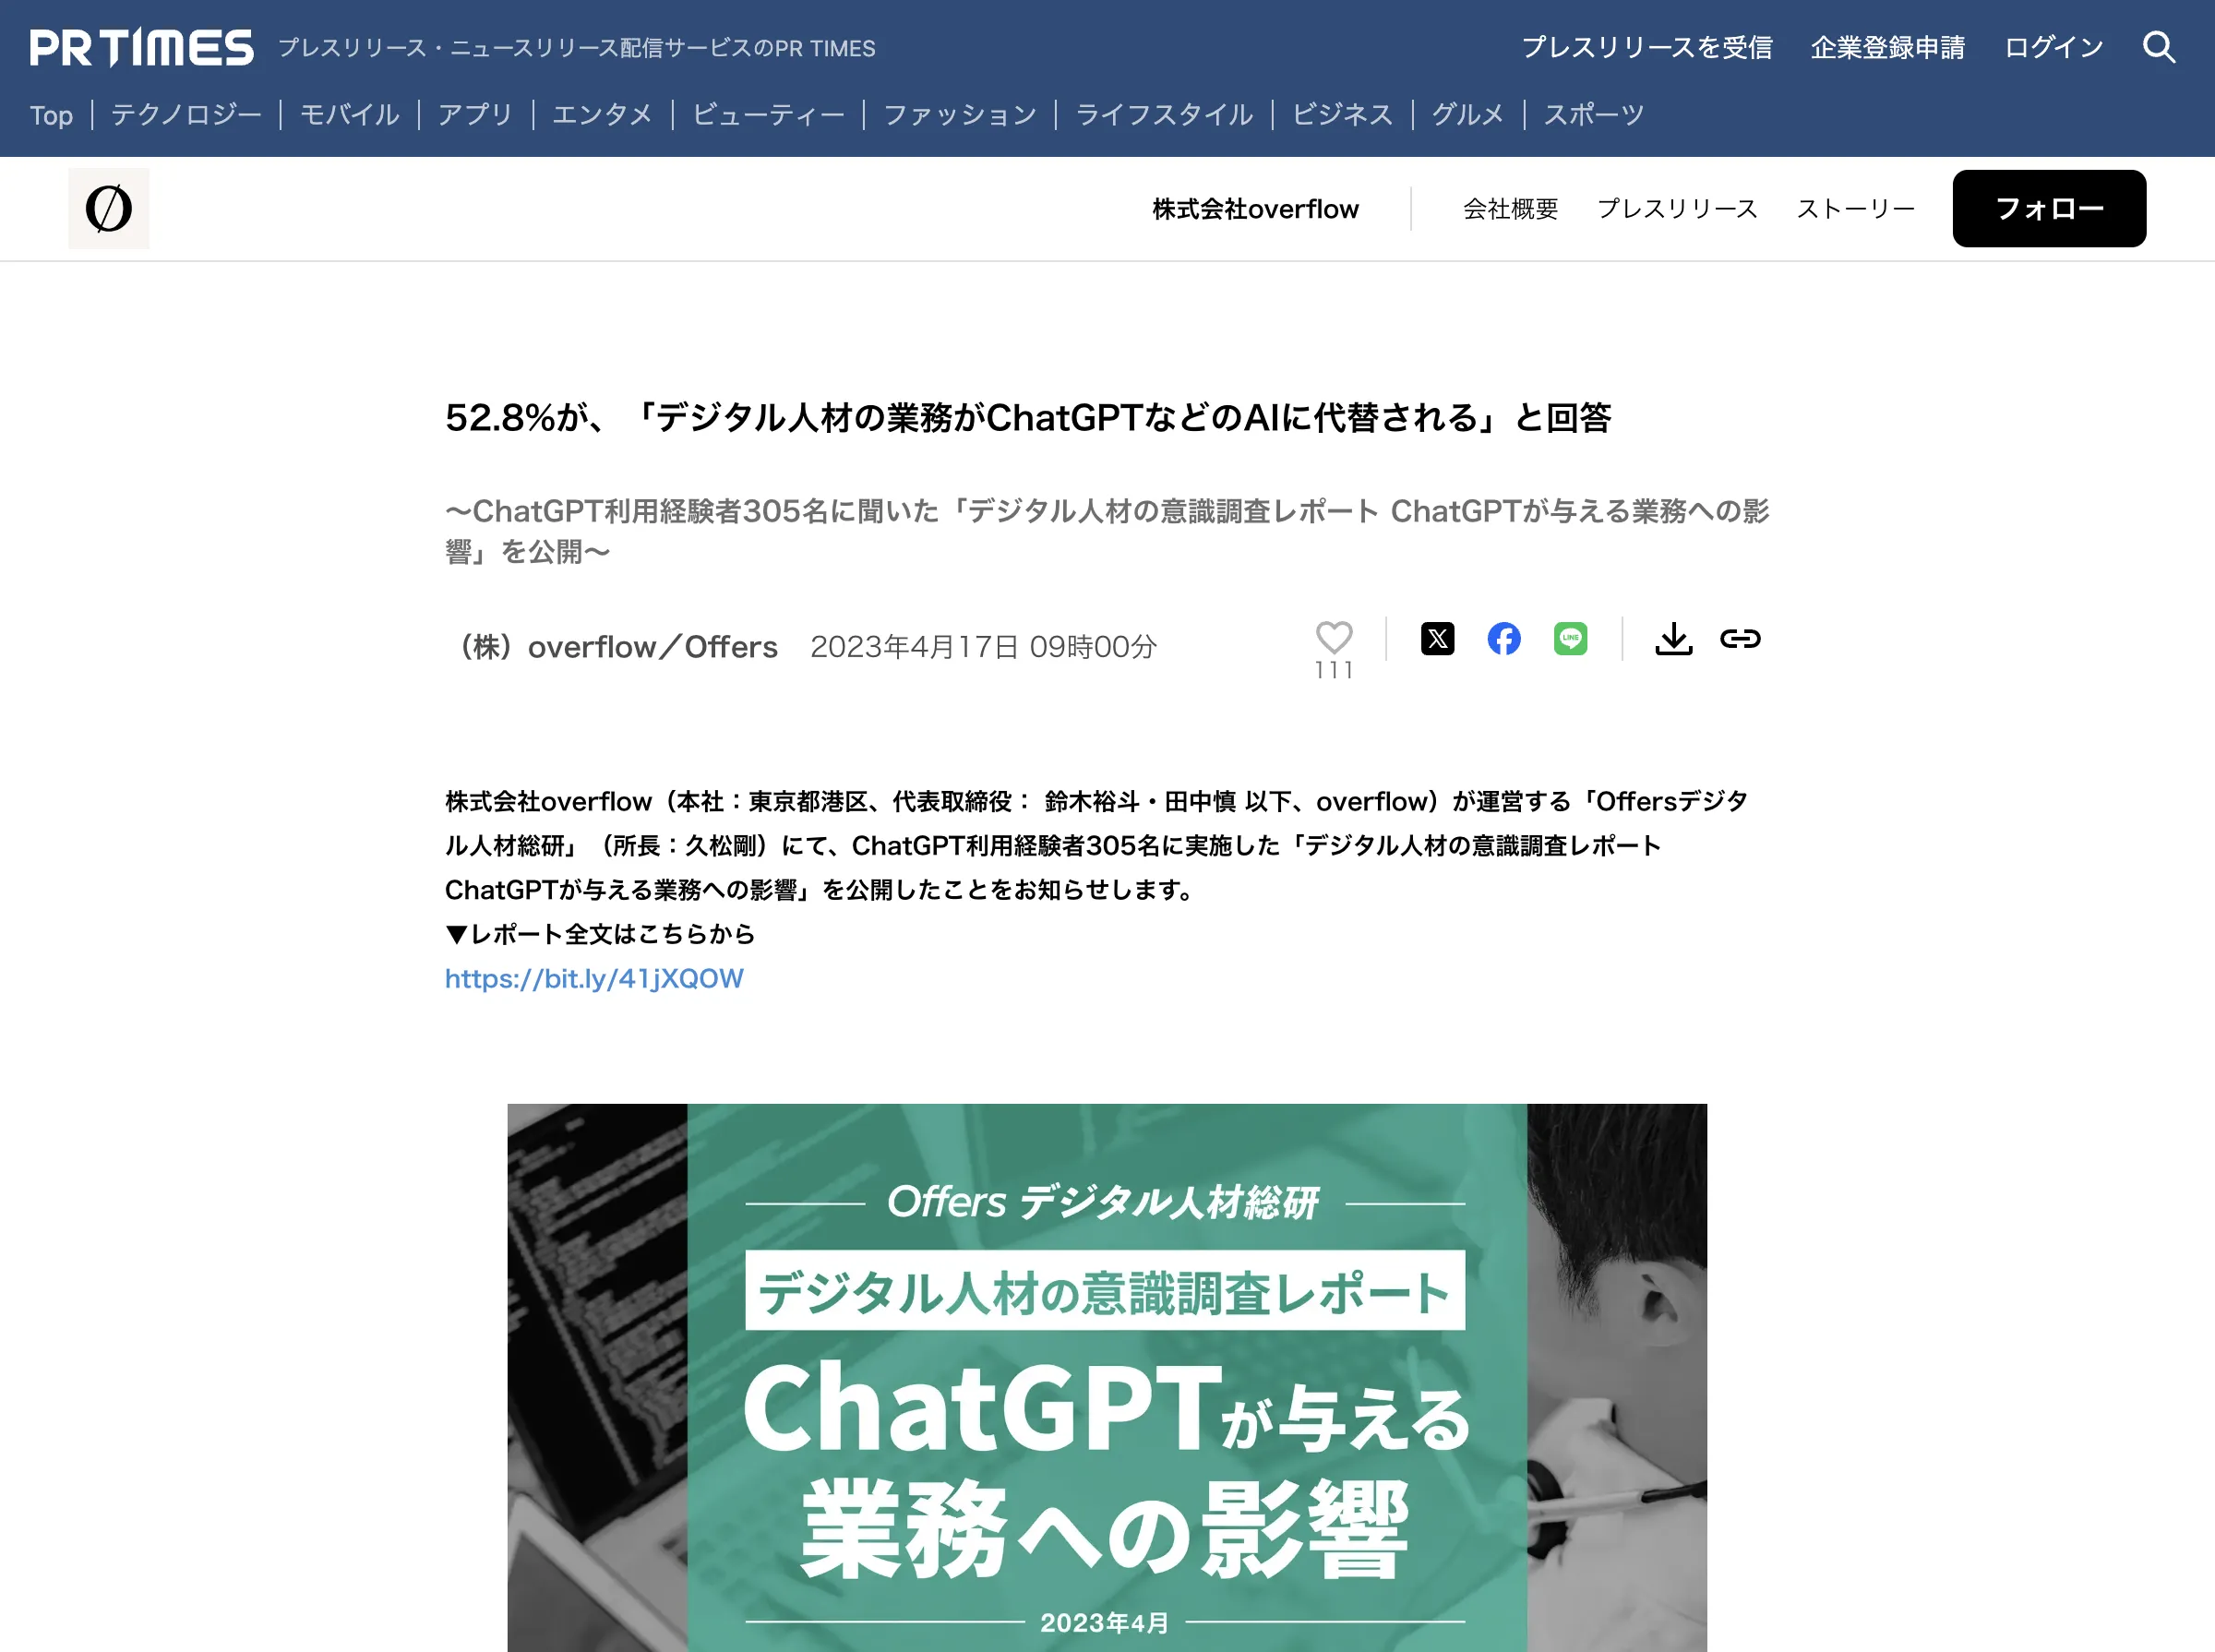 ChatGPTが変えるデジタル人材の未来：影響と受け入れ状況に関する意識調査レポート公開